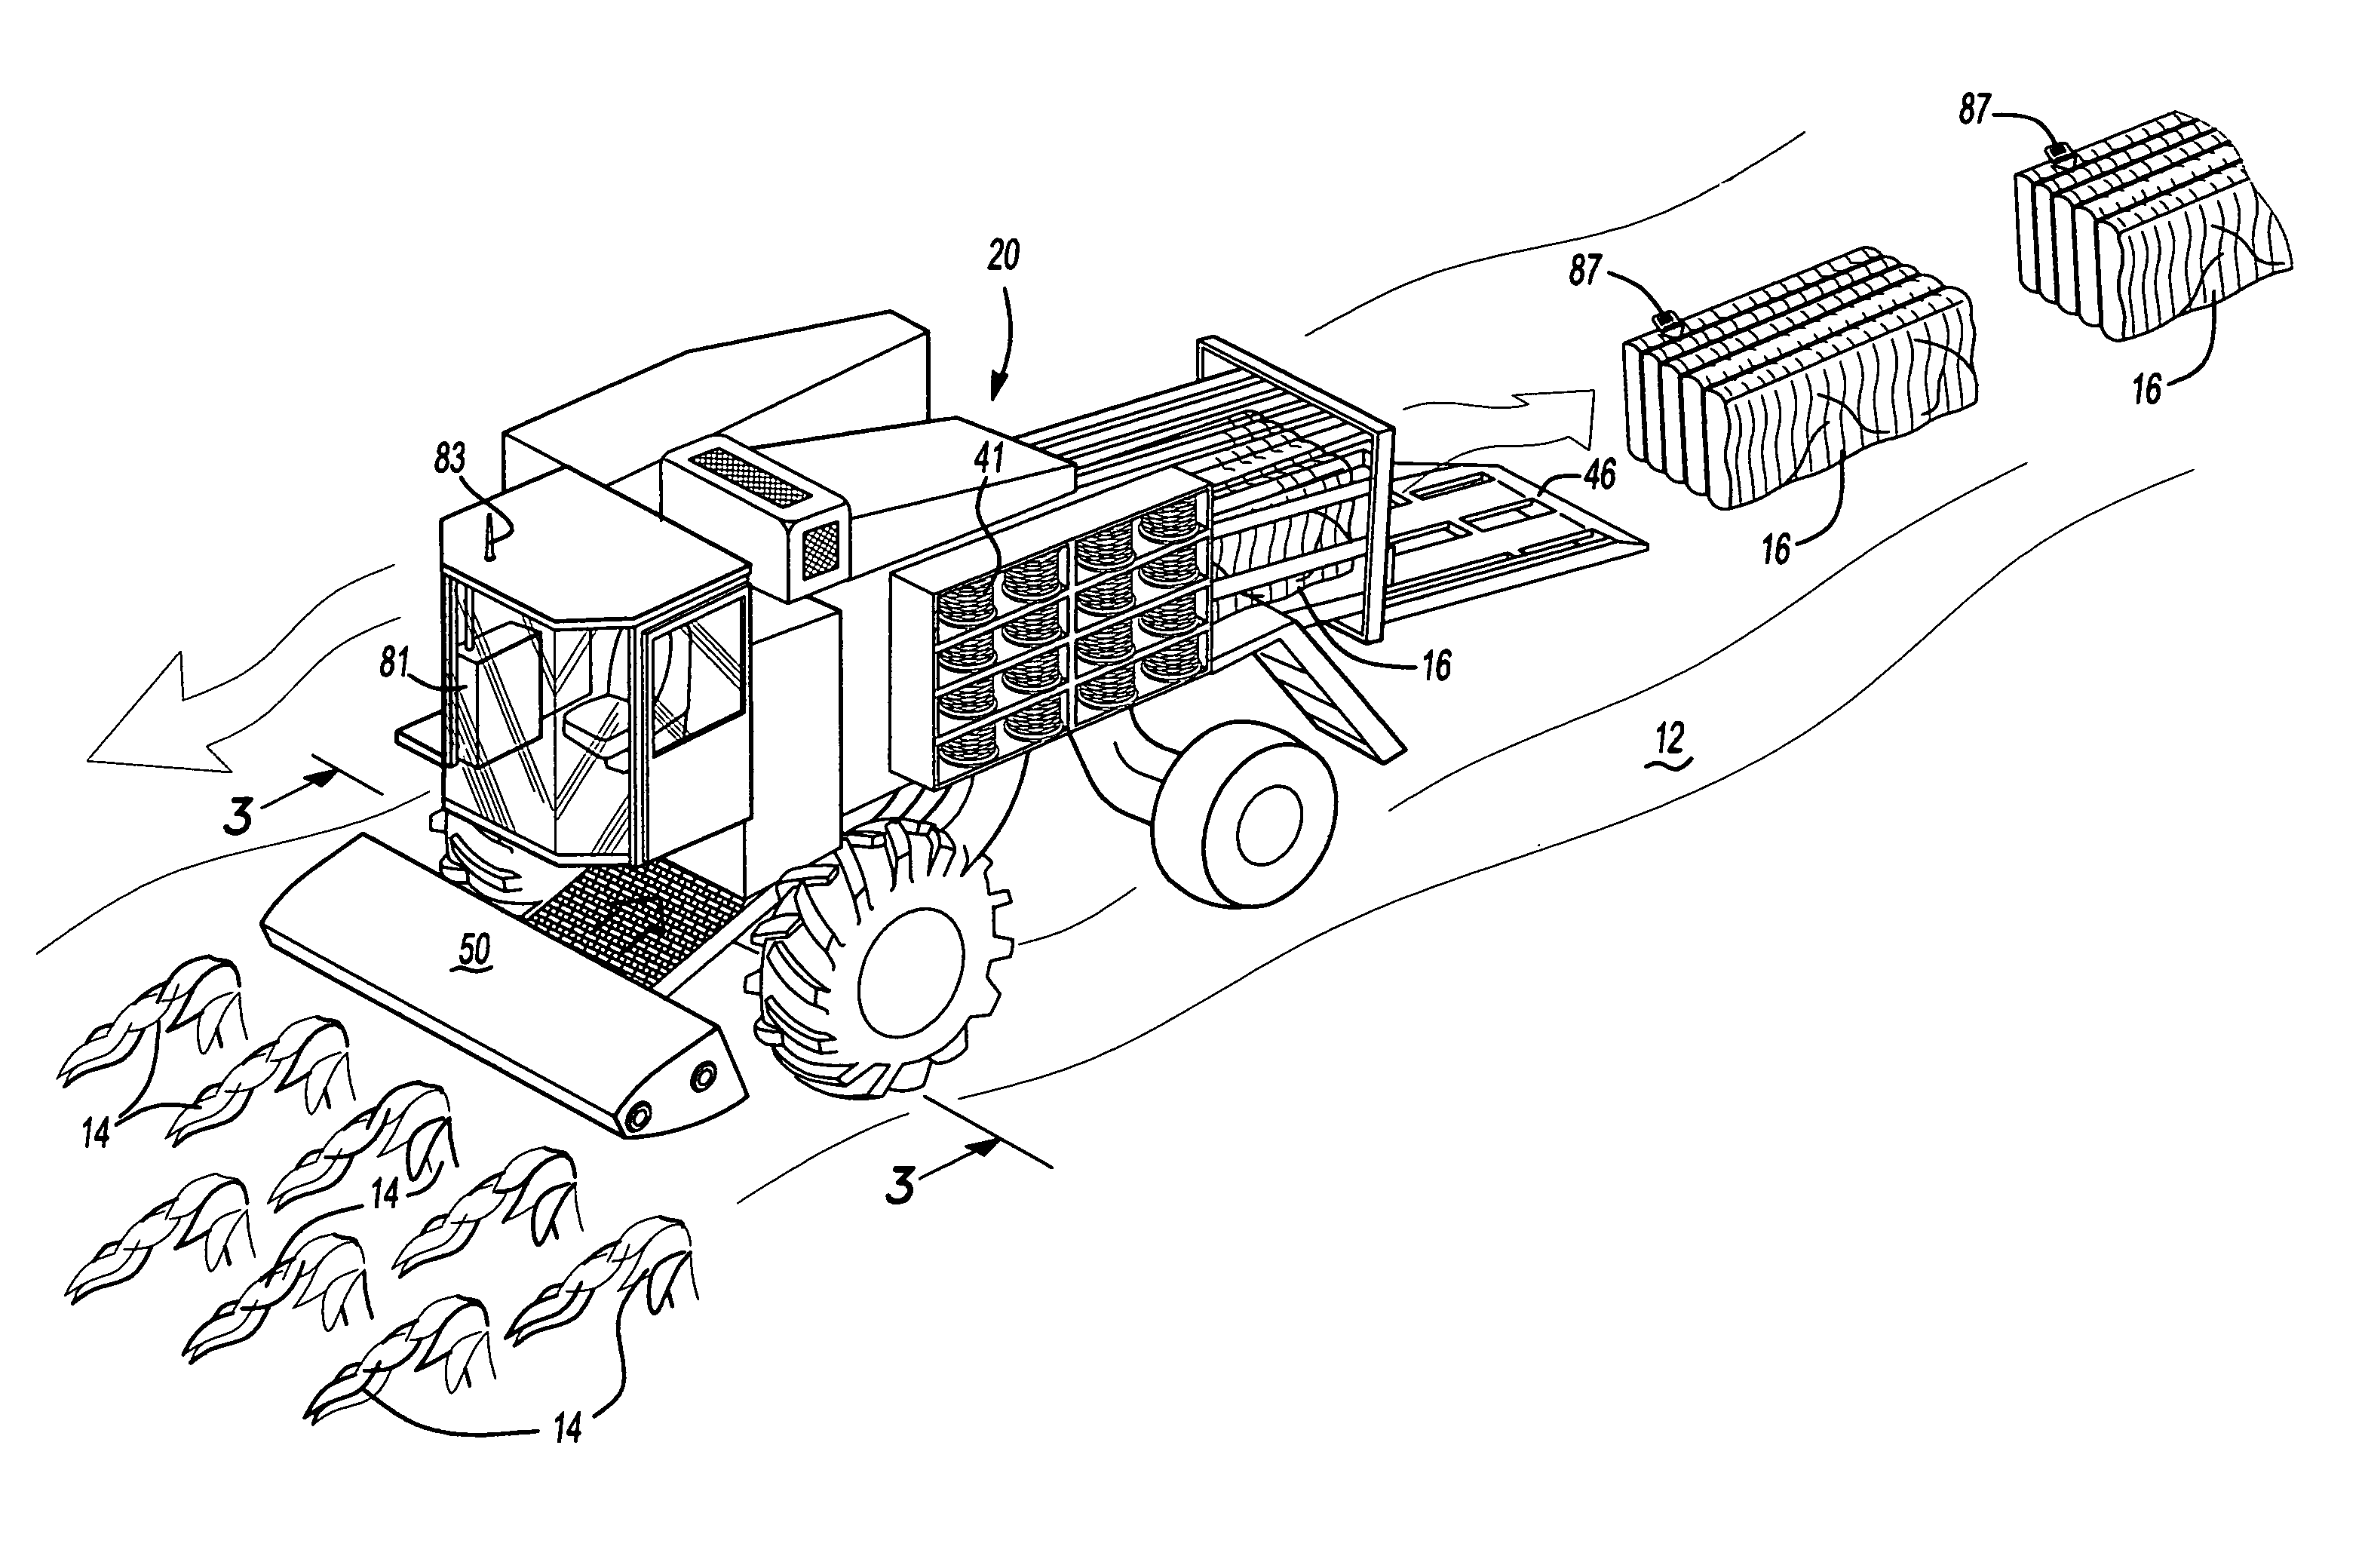 Biomass harvesting system